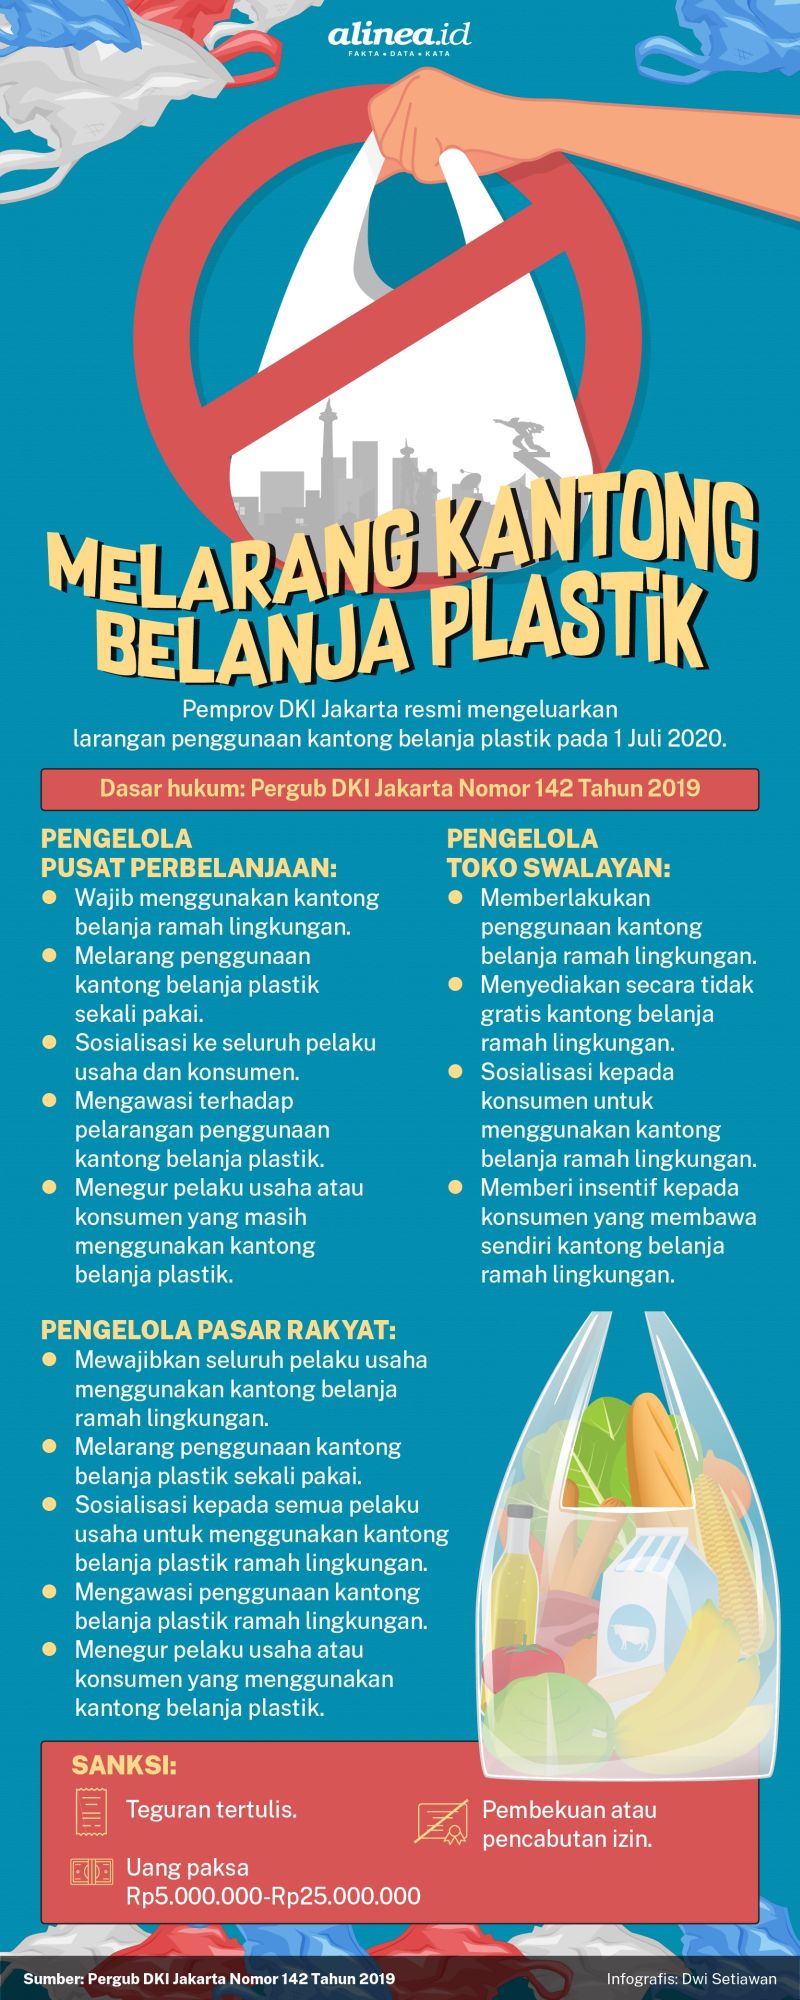 Infografik melarang kantong belanja plastik. Alinea.id/Dwi Setiawan.